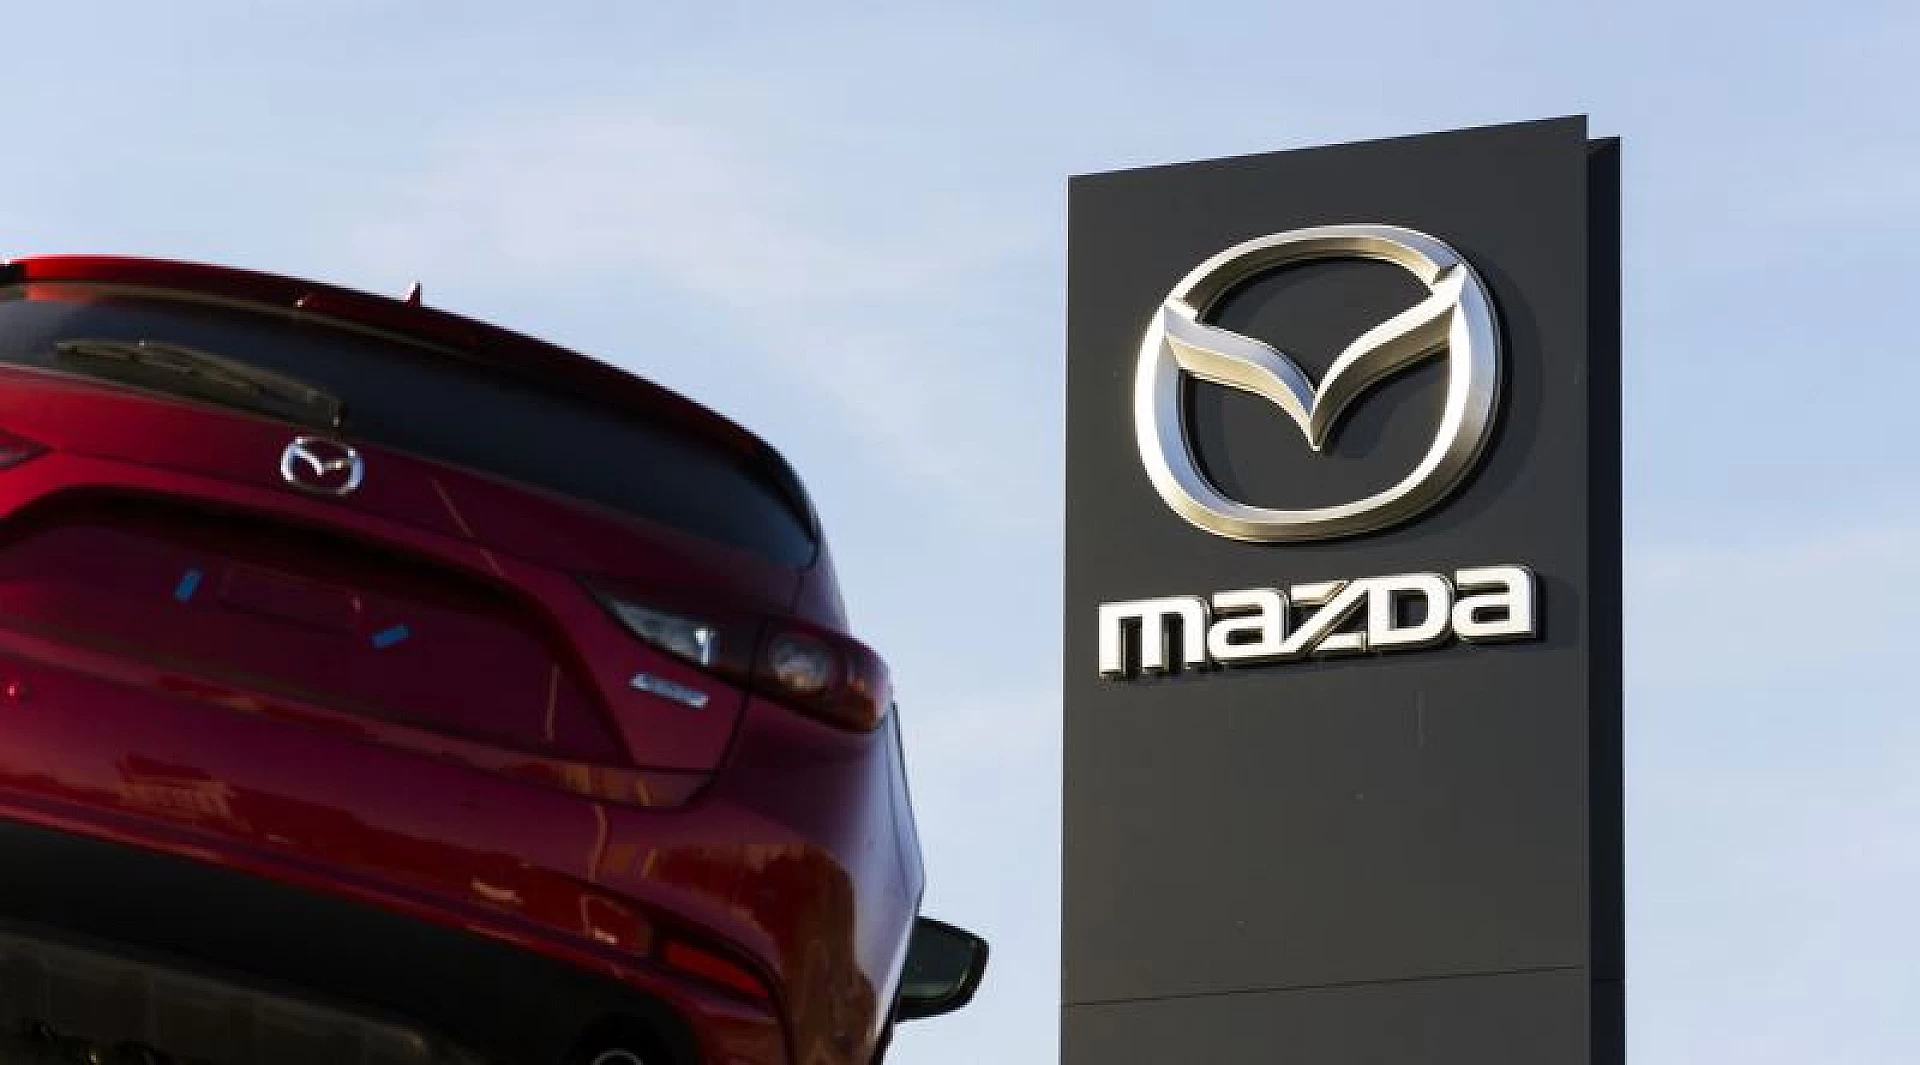 Japon otomobil devi Mazda Türkiye'ye veda etti.